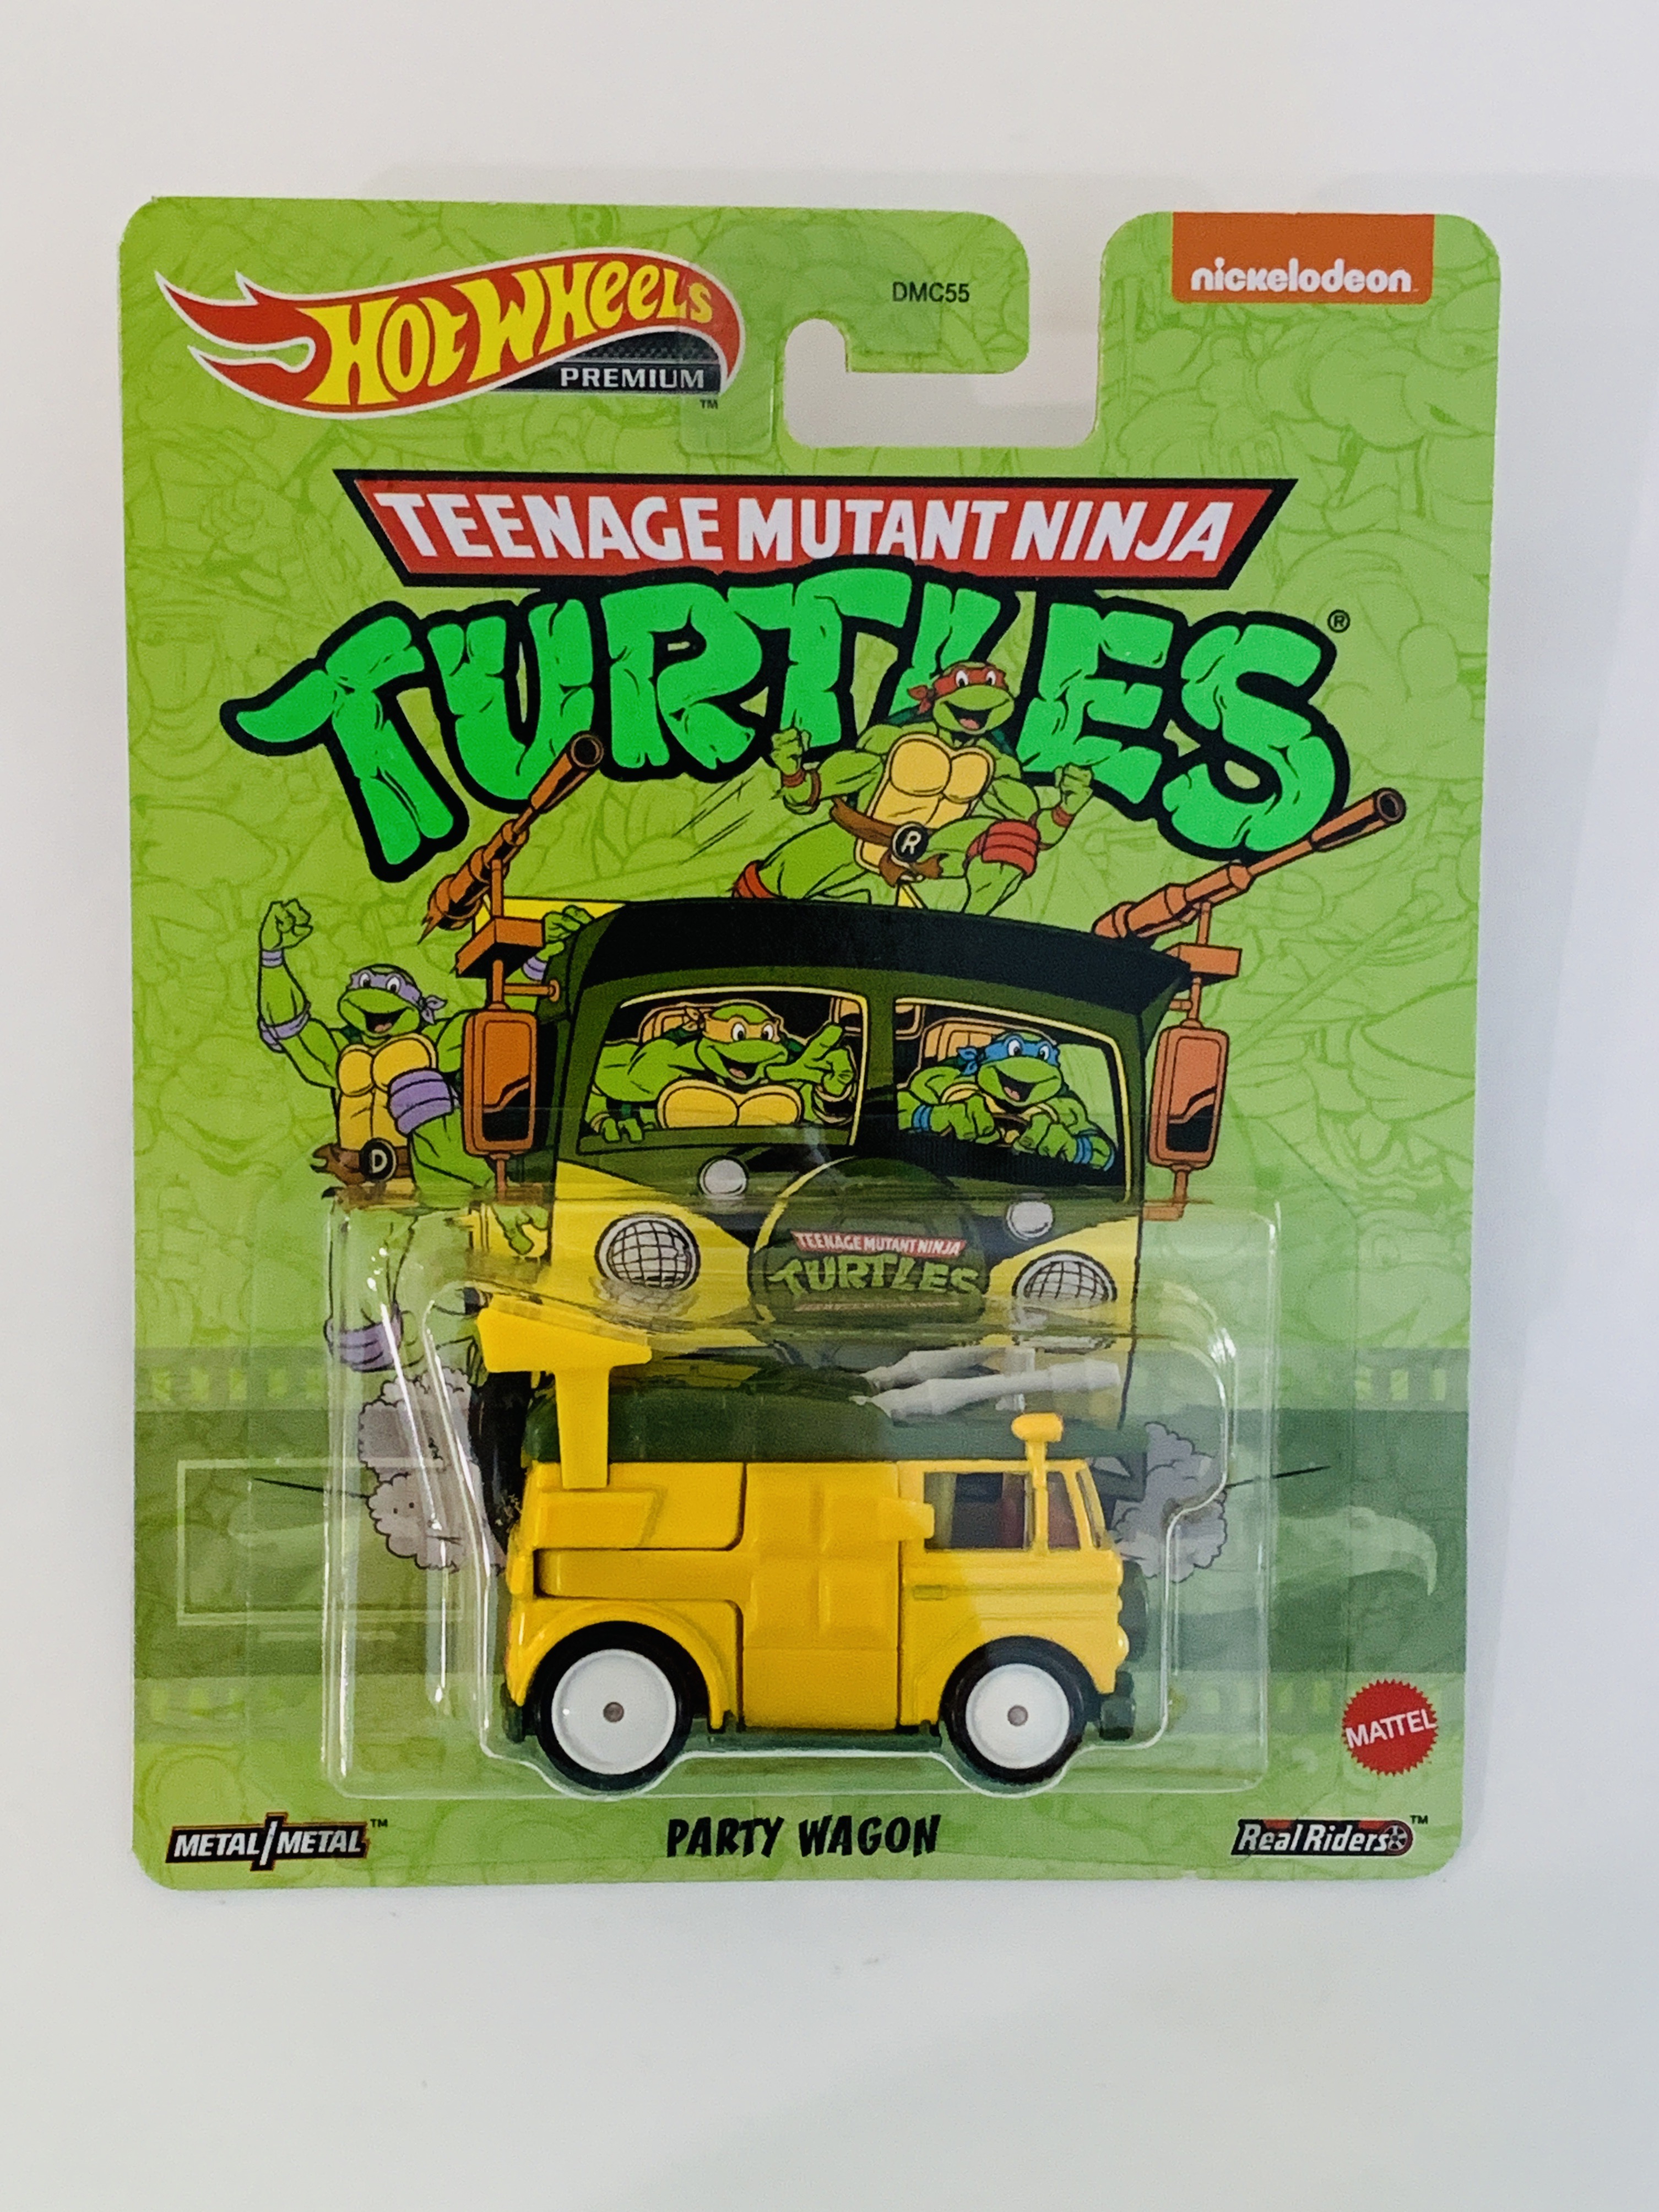 Hot Wheels Premium Teenage Mutant Ninja Turtles Party Wagon